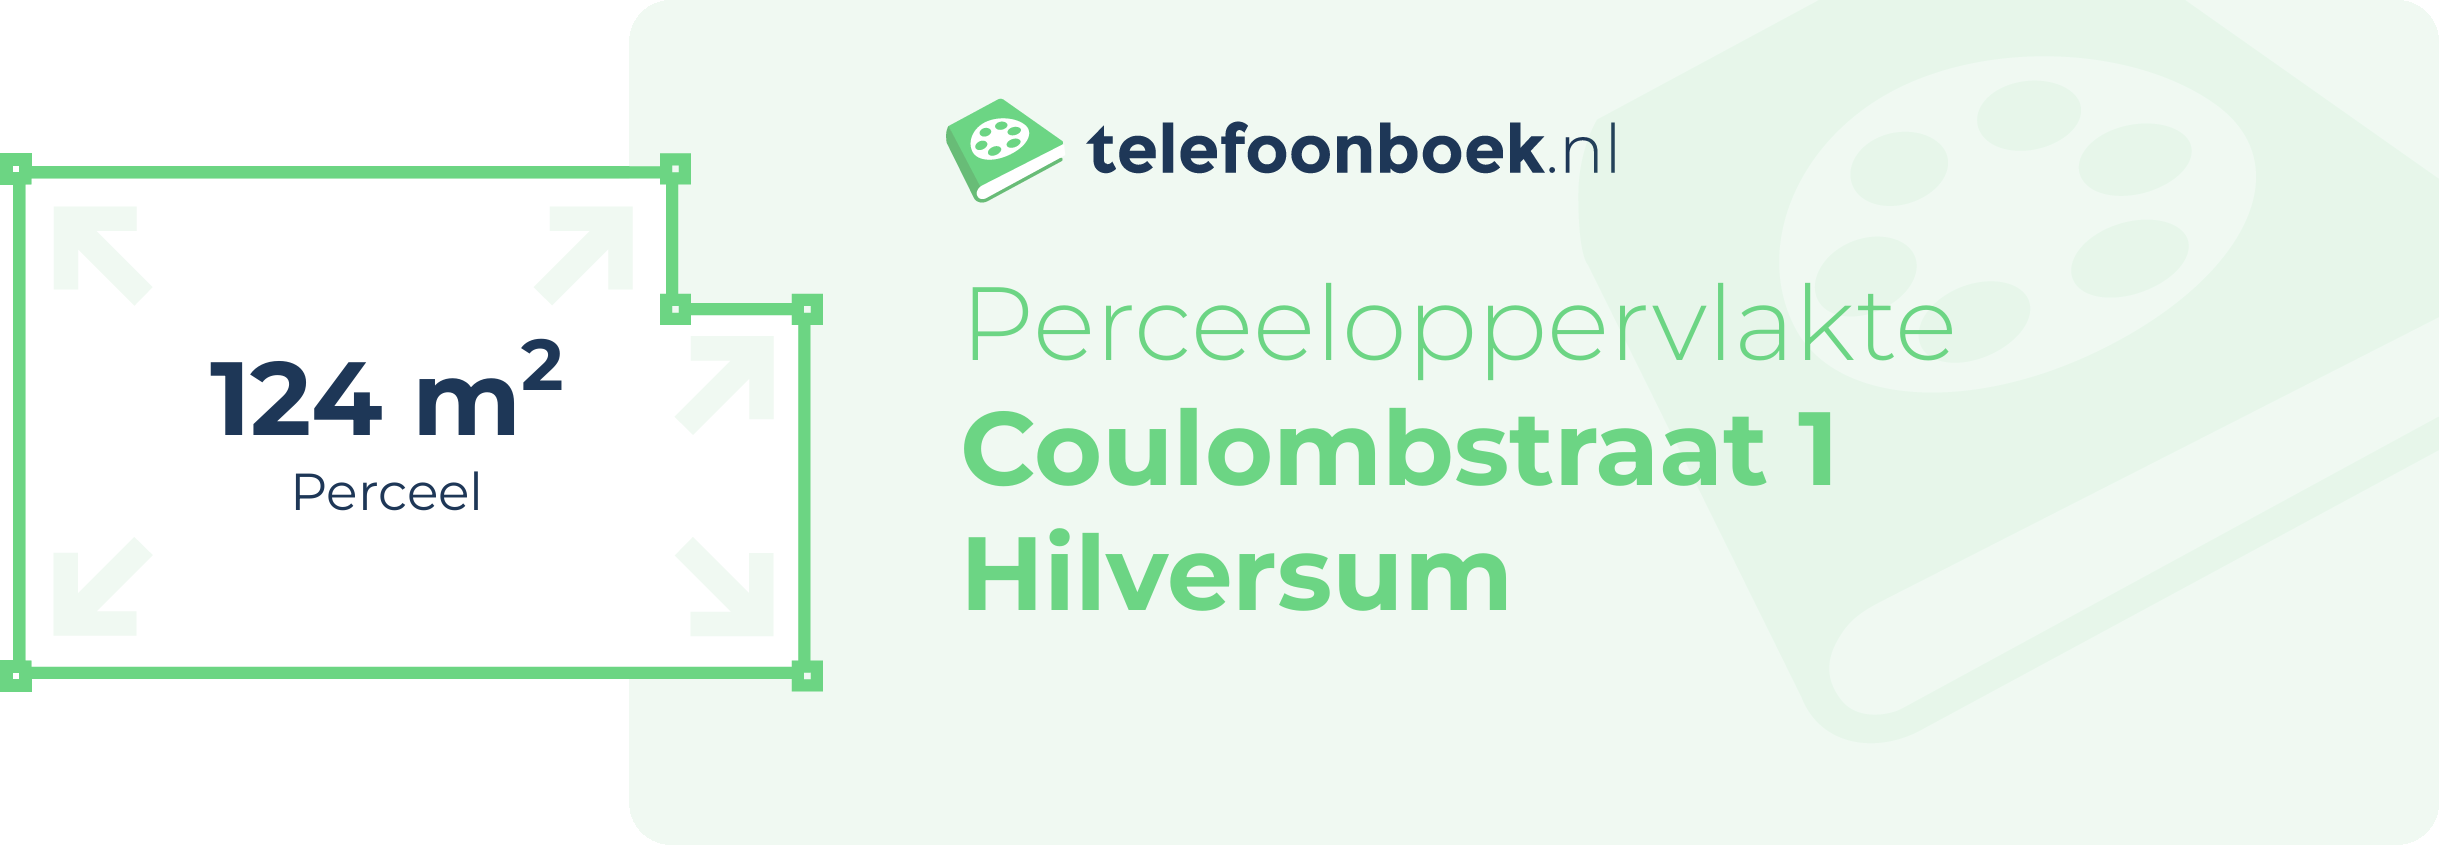 Perceeloppervlakte Coulombstraat 1 Hilversum